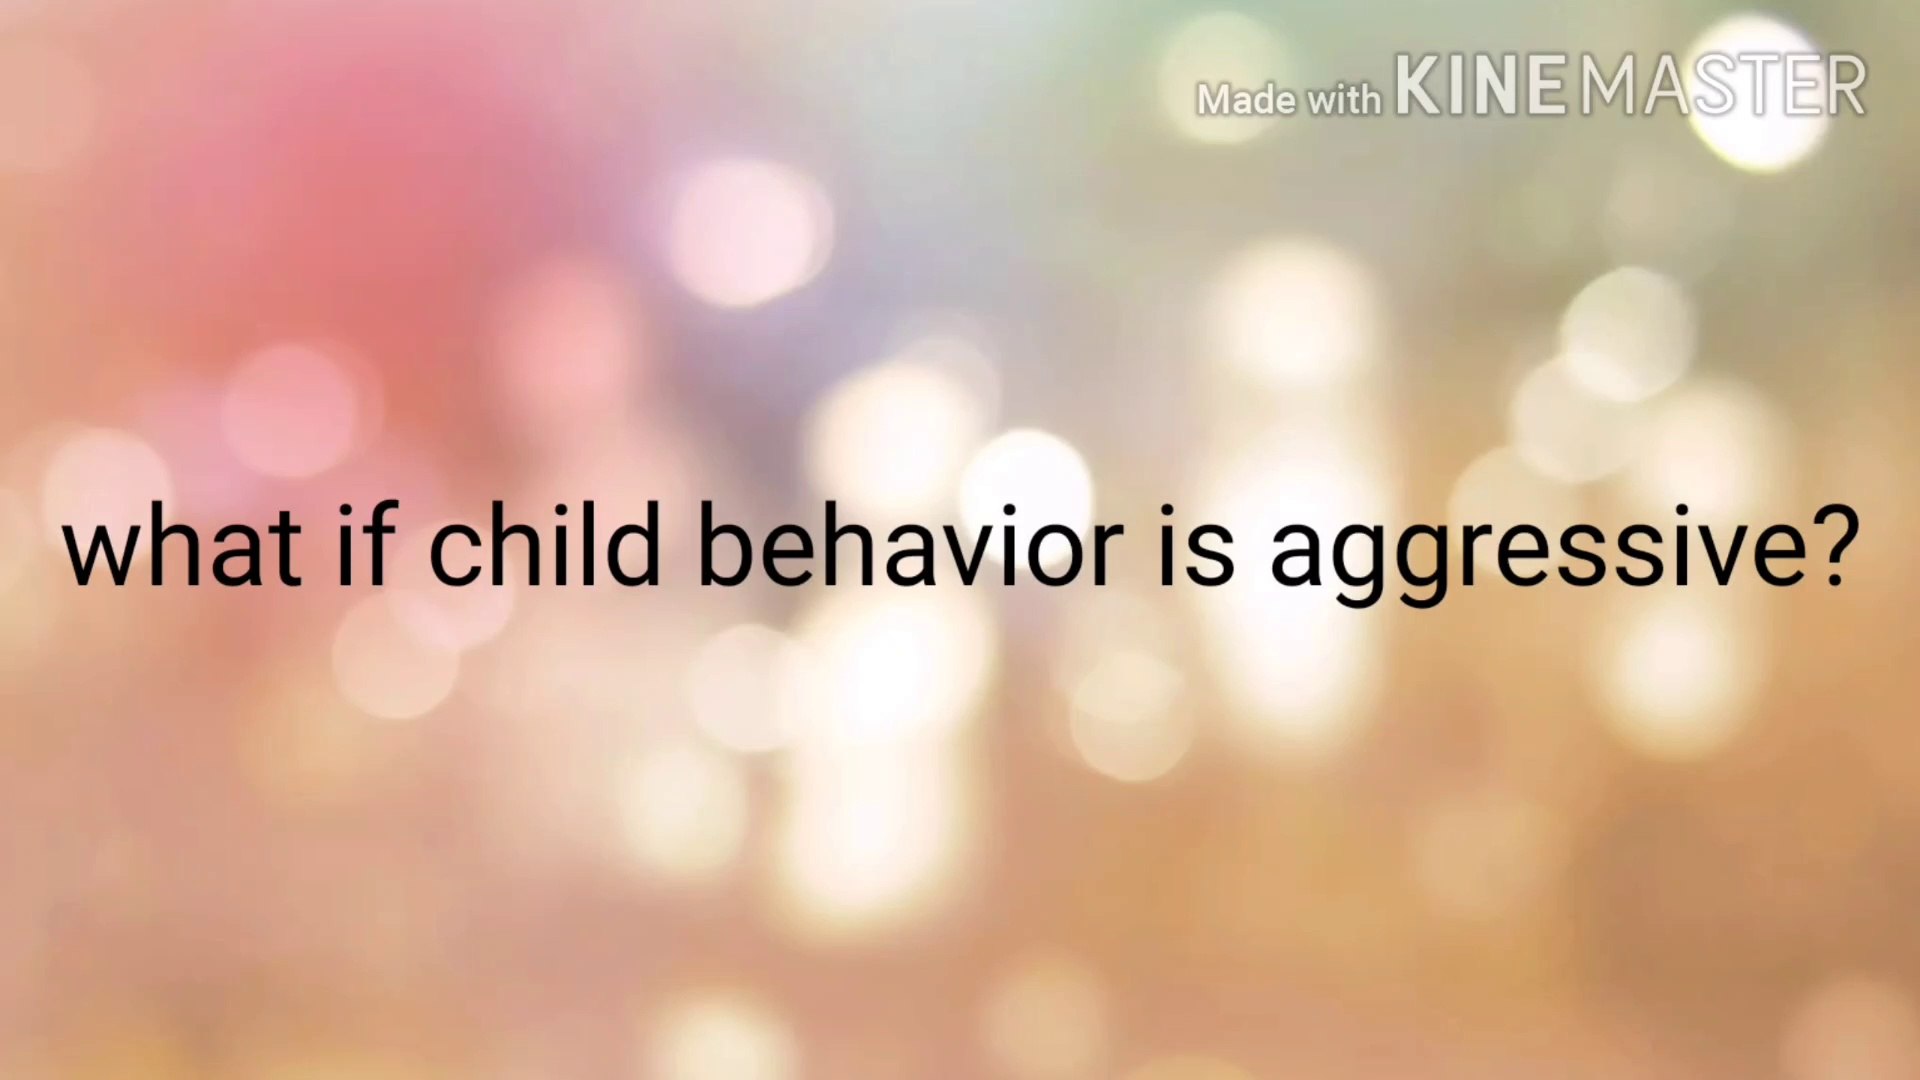 What if child behavior is aggressive?